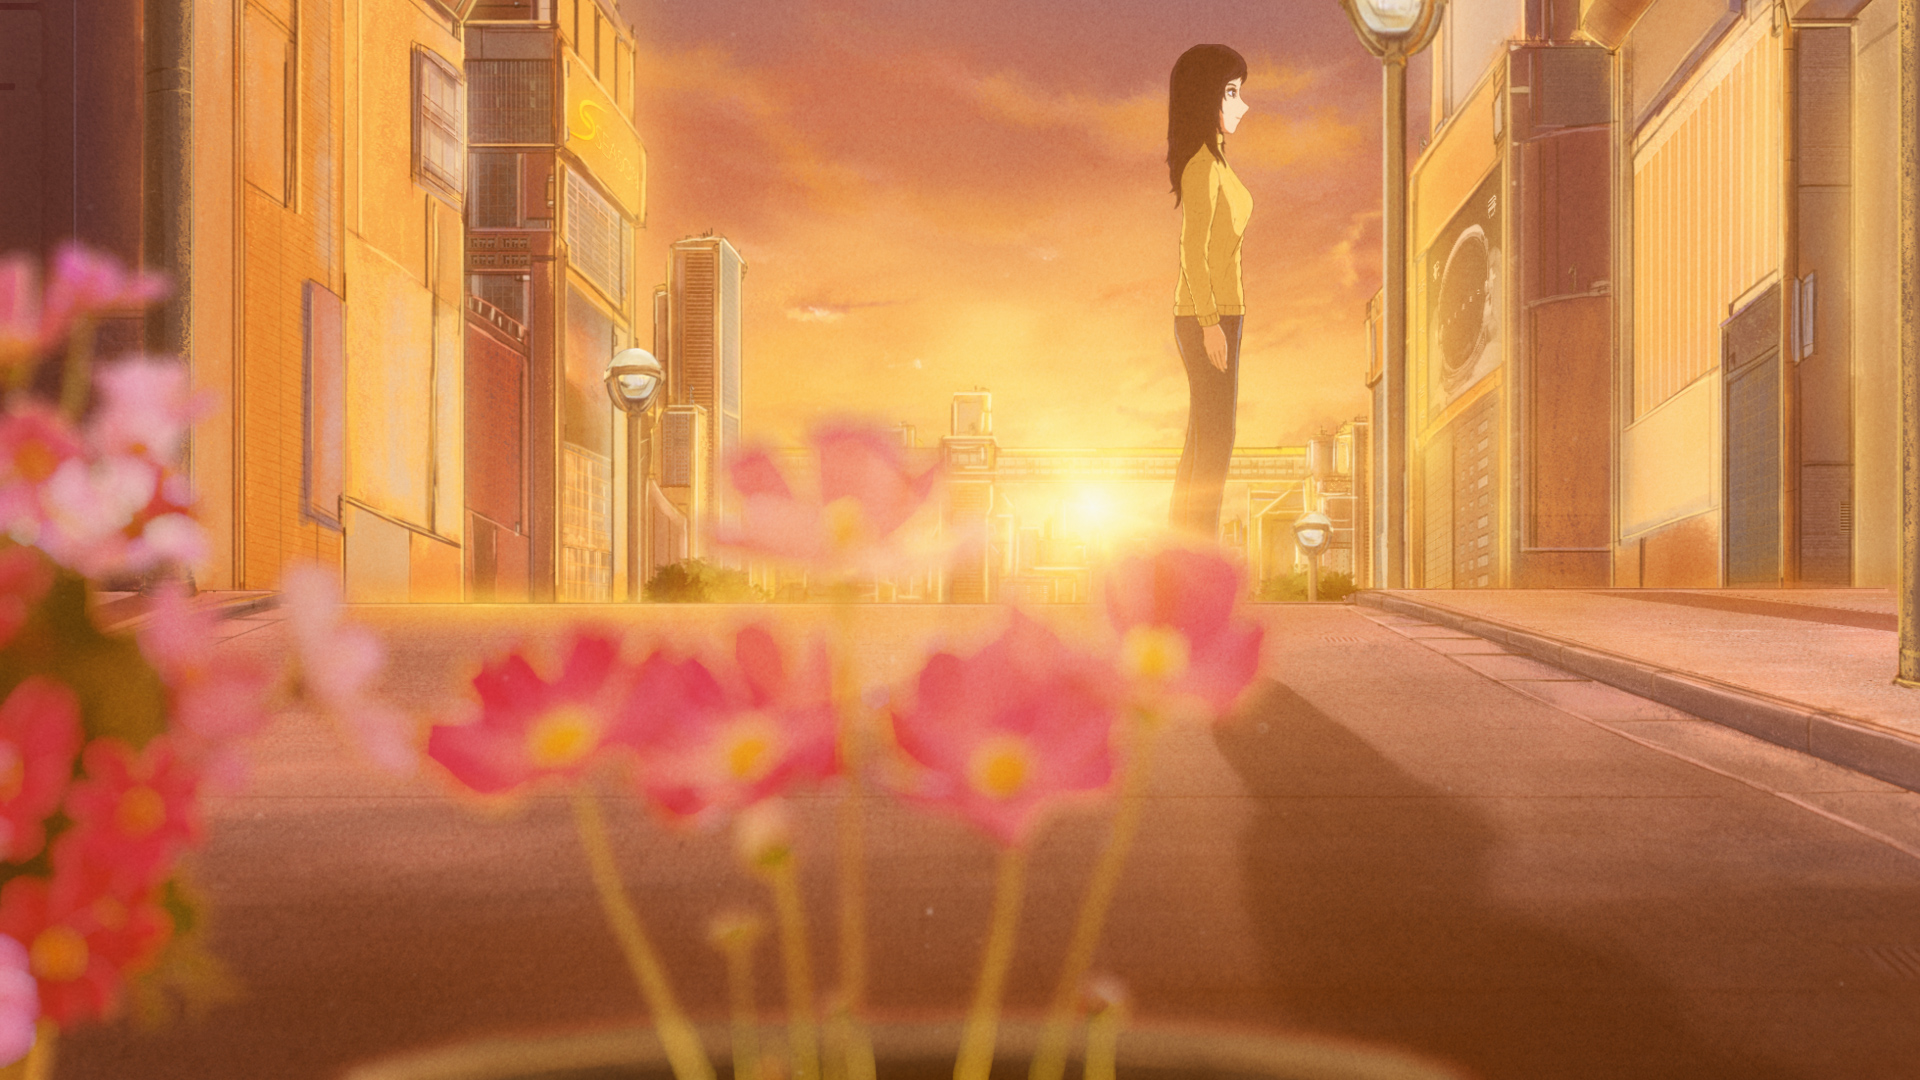 Anime 1920x1080 outdoors digital art anime city sunset glow sky anime flowers building cityscape anime girls sunset street city